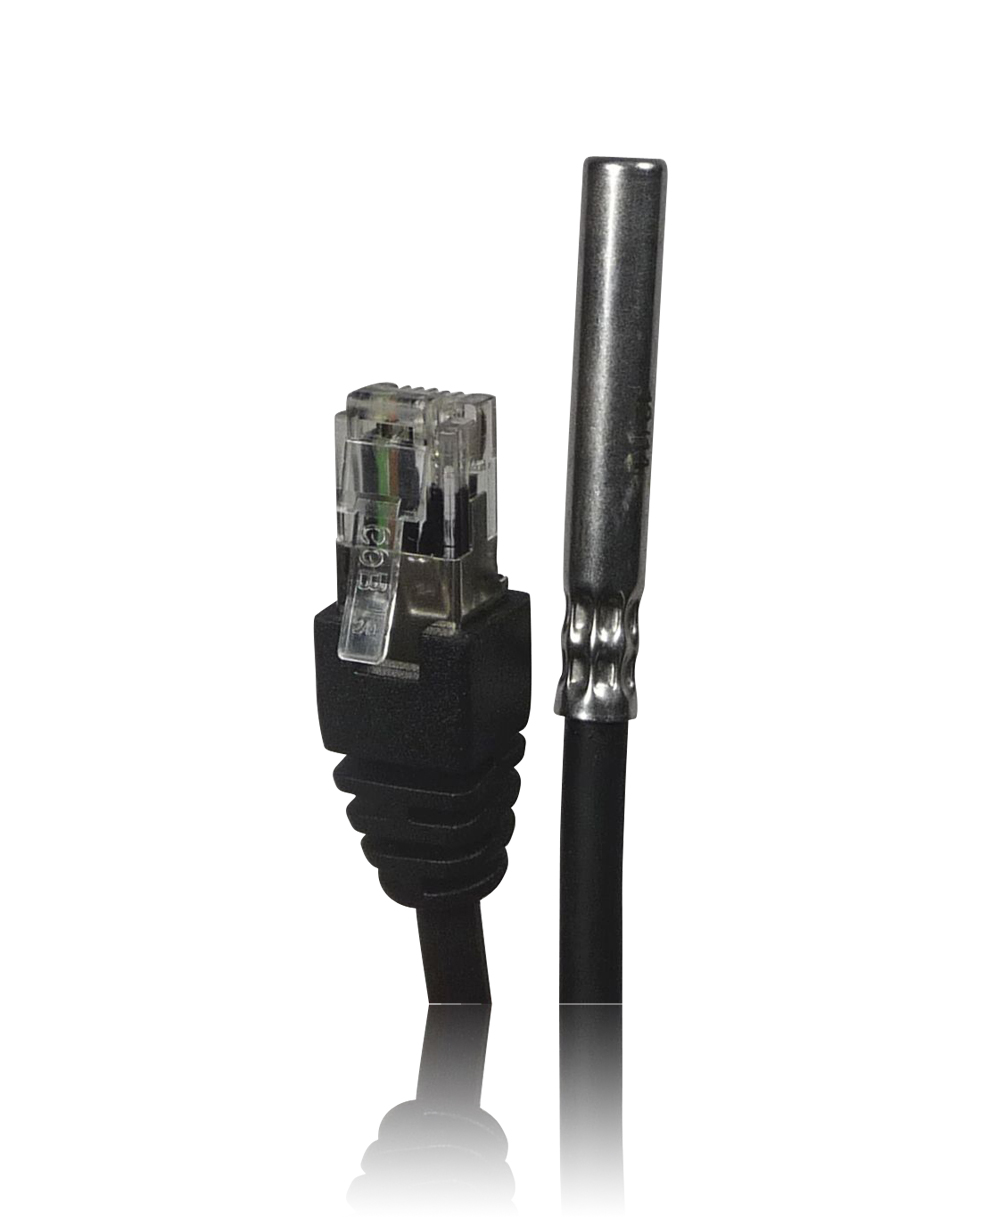 1-Wire Industrial Temperature Sensor Pro Waterproof, Cable Probe